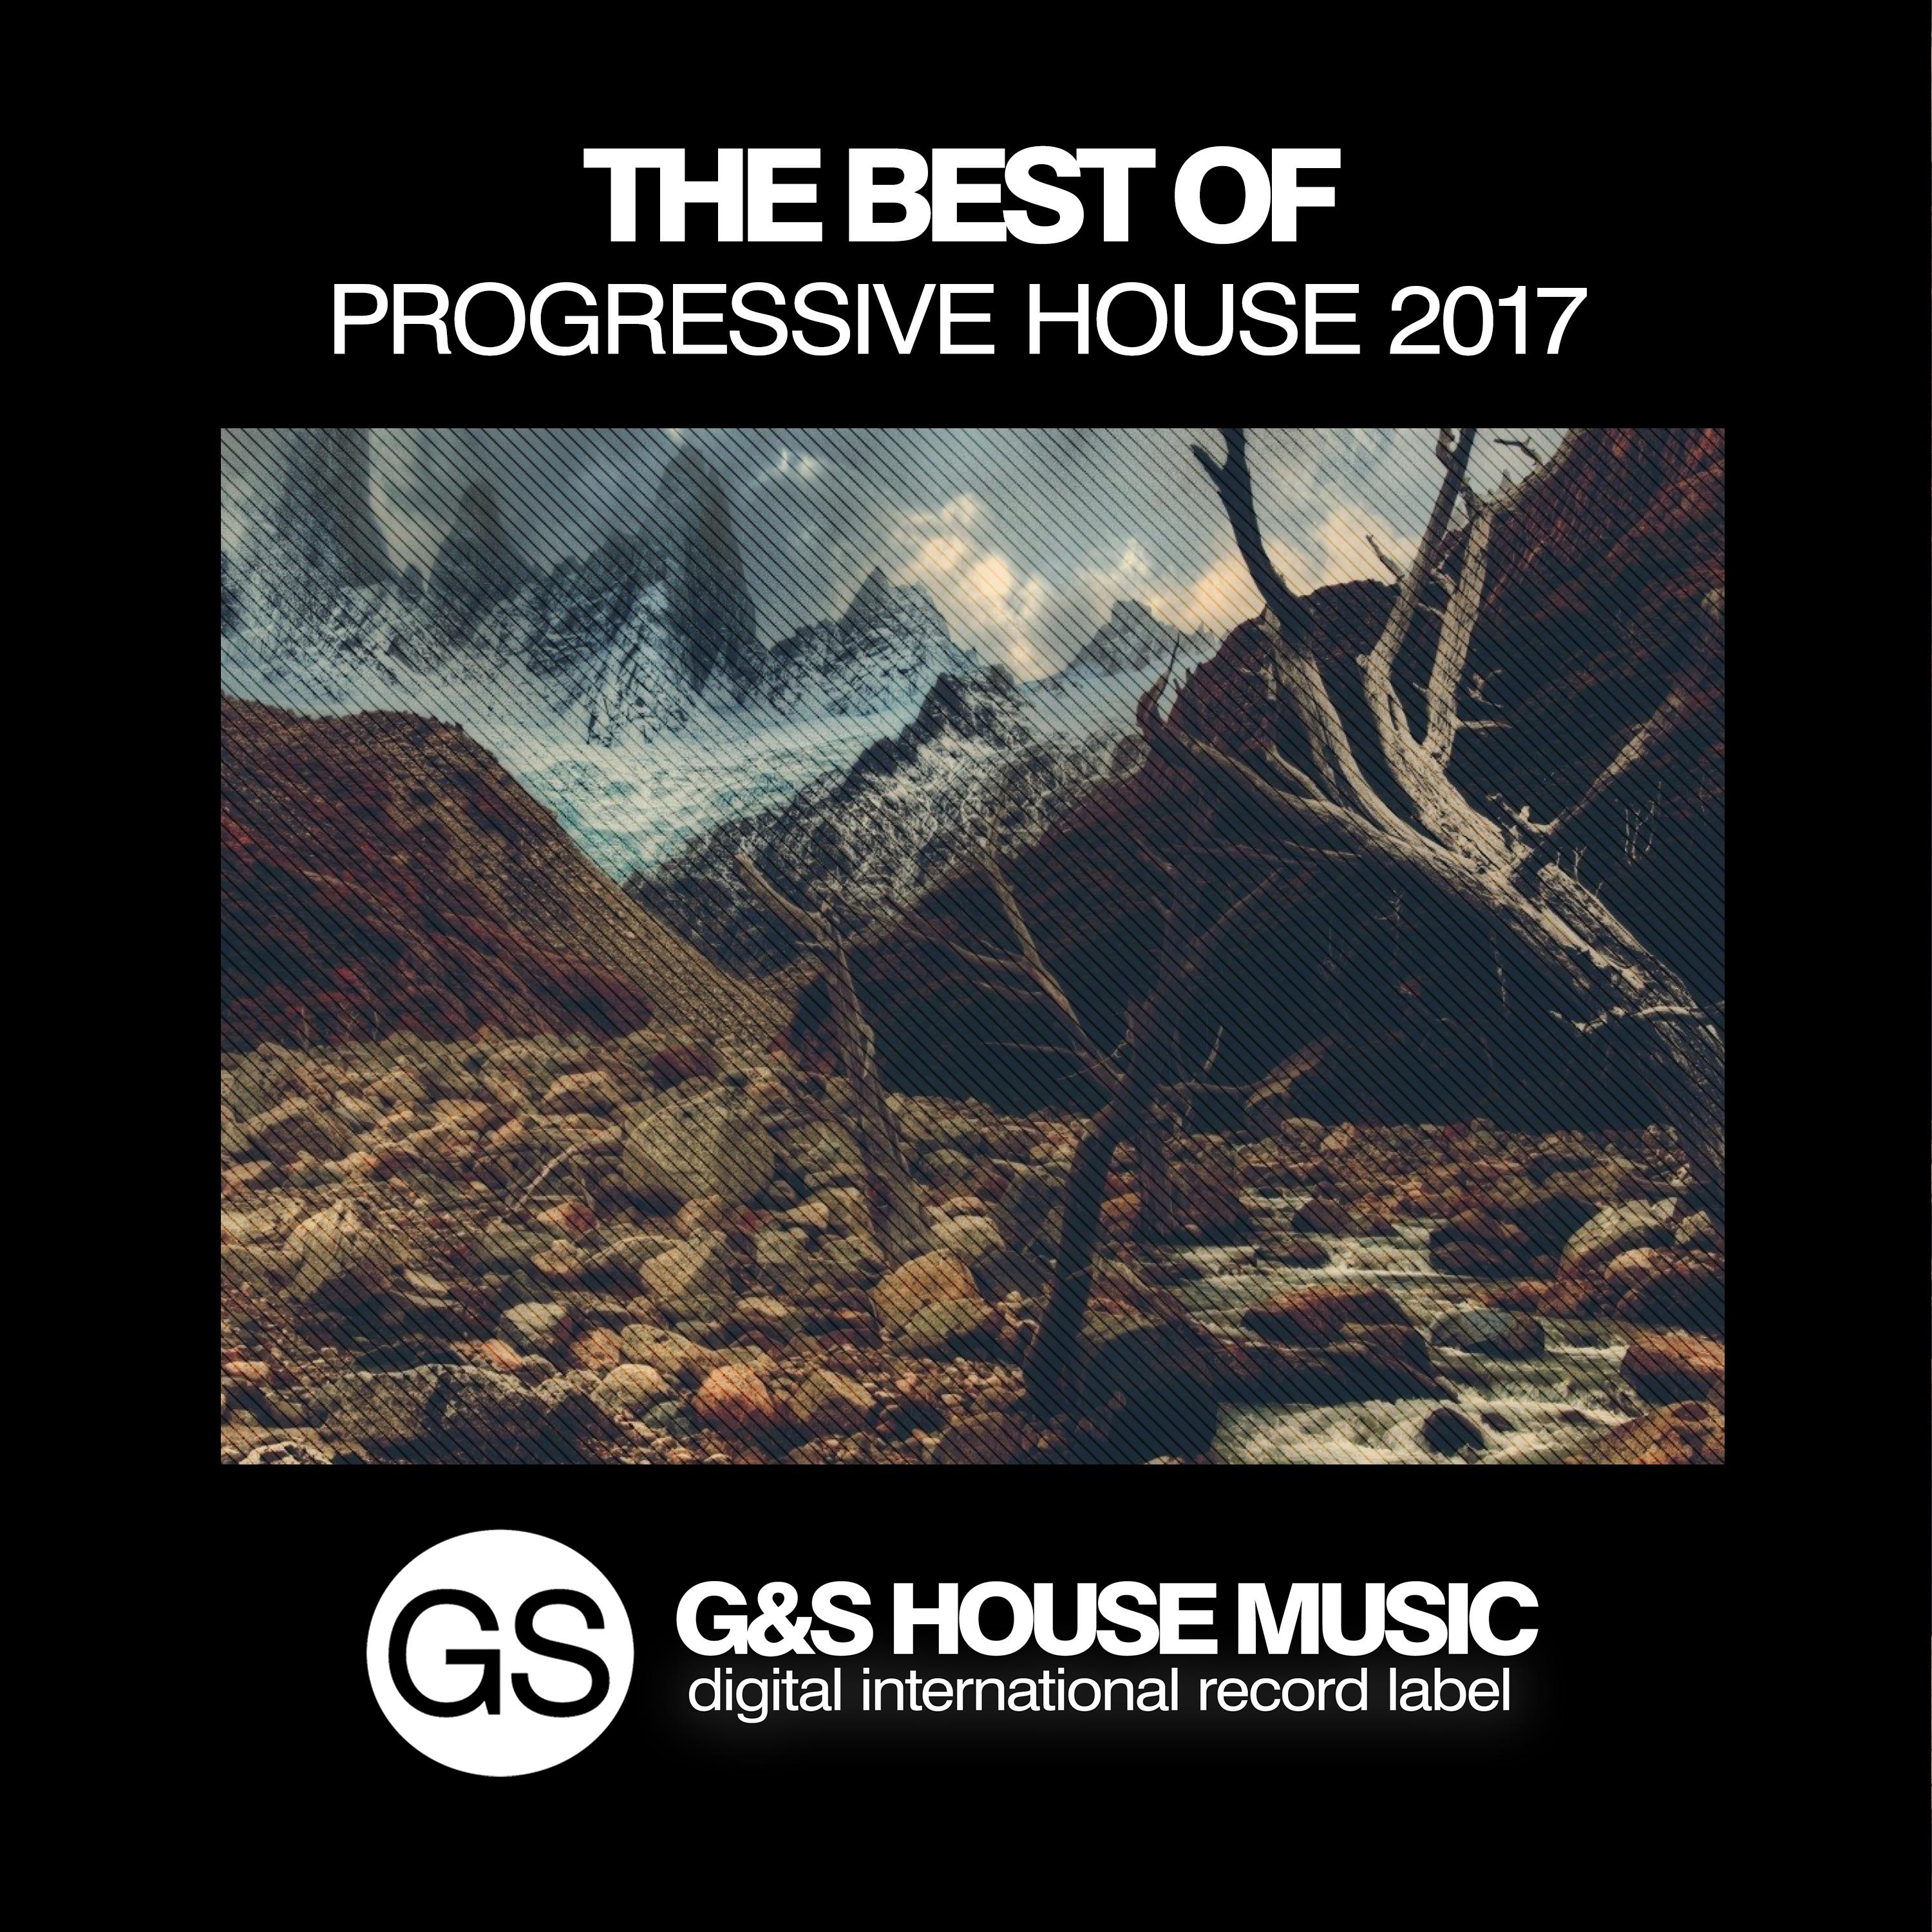 The Best of Progressive House 2017